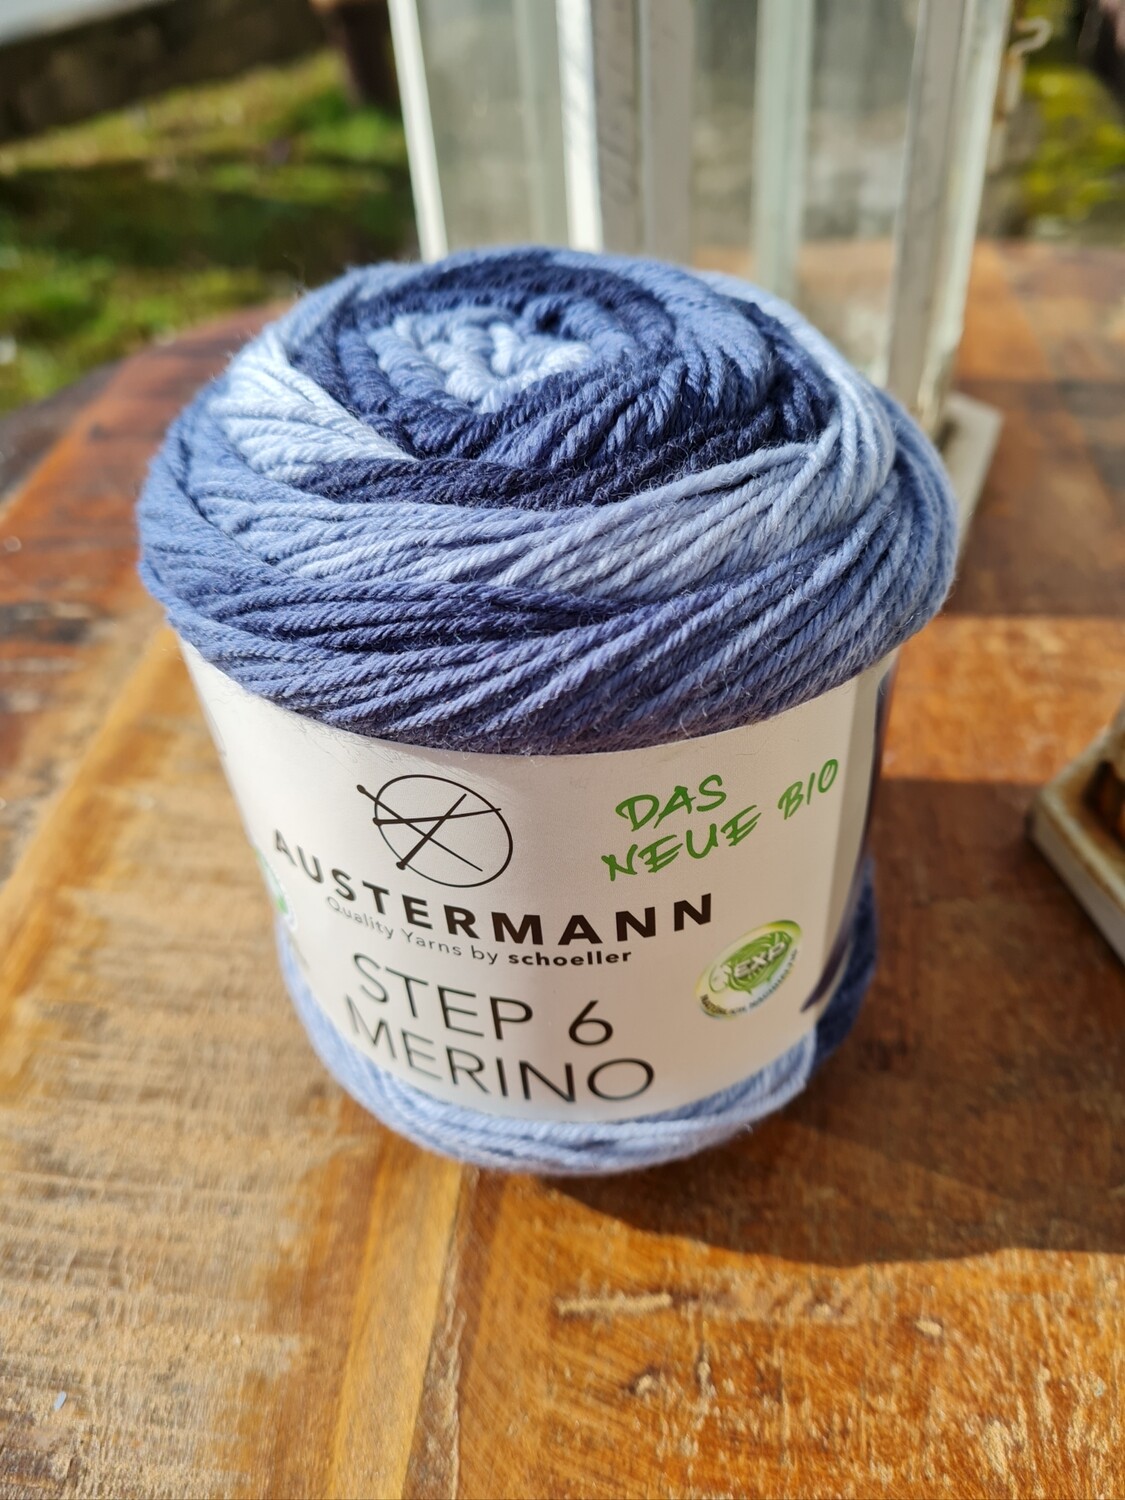 Austermann | Step 6 Merino